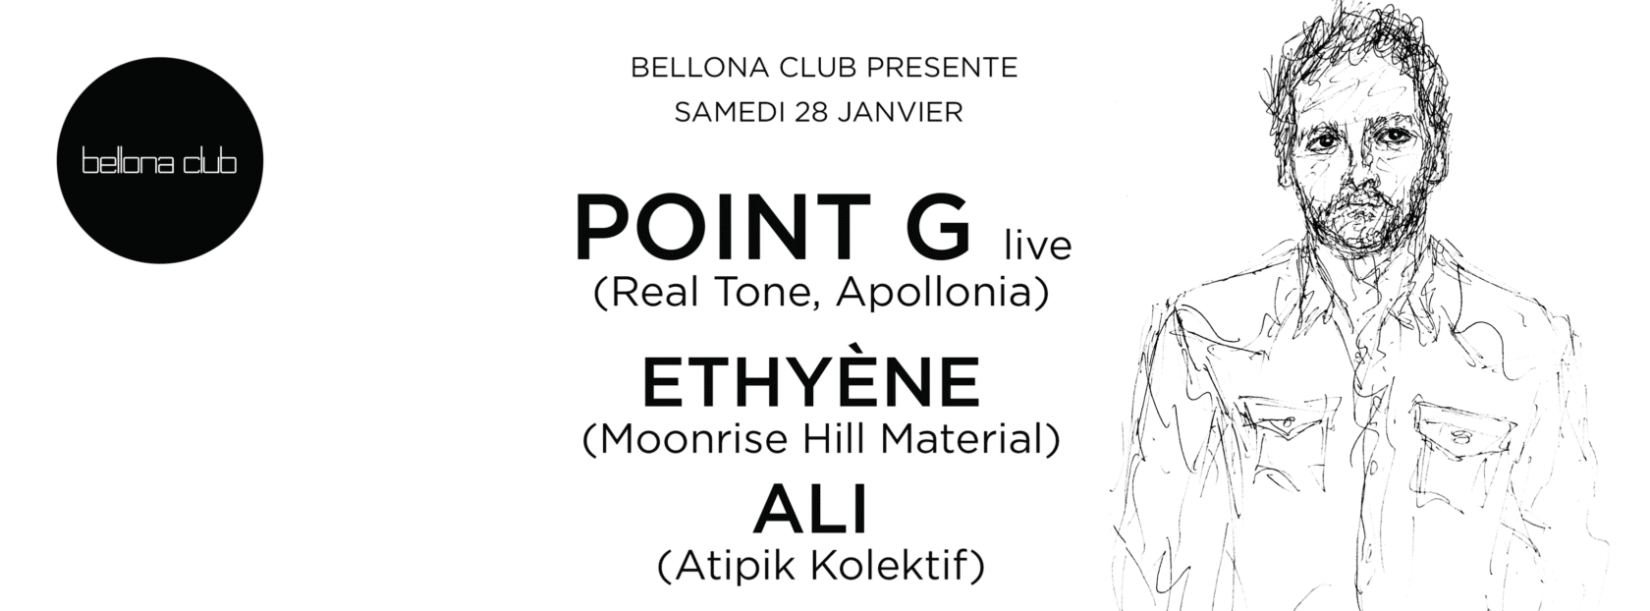 Bellona Club présente Point G live, Ethyène, ALI